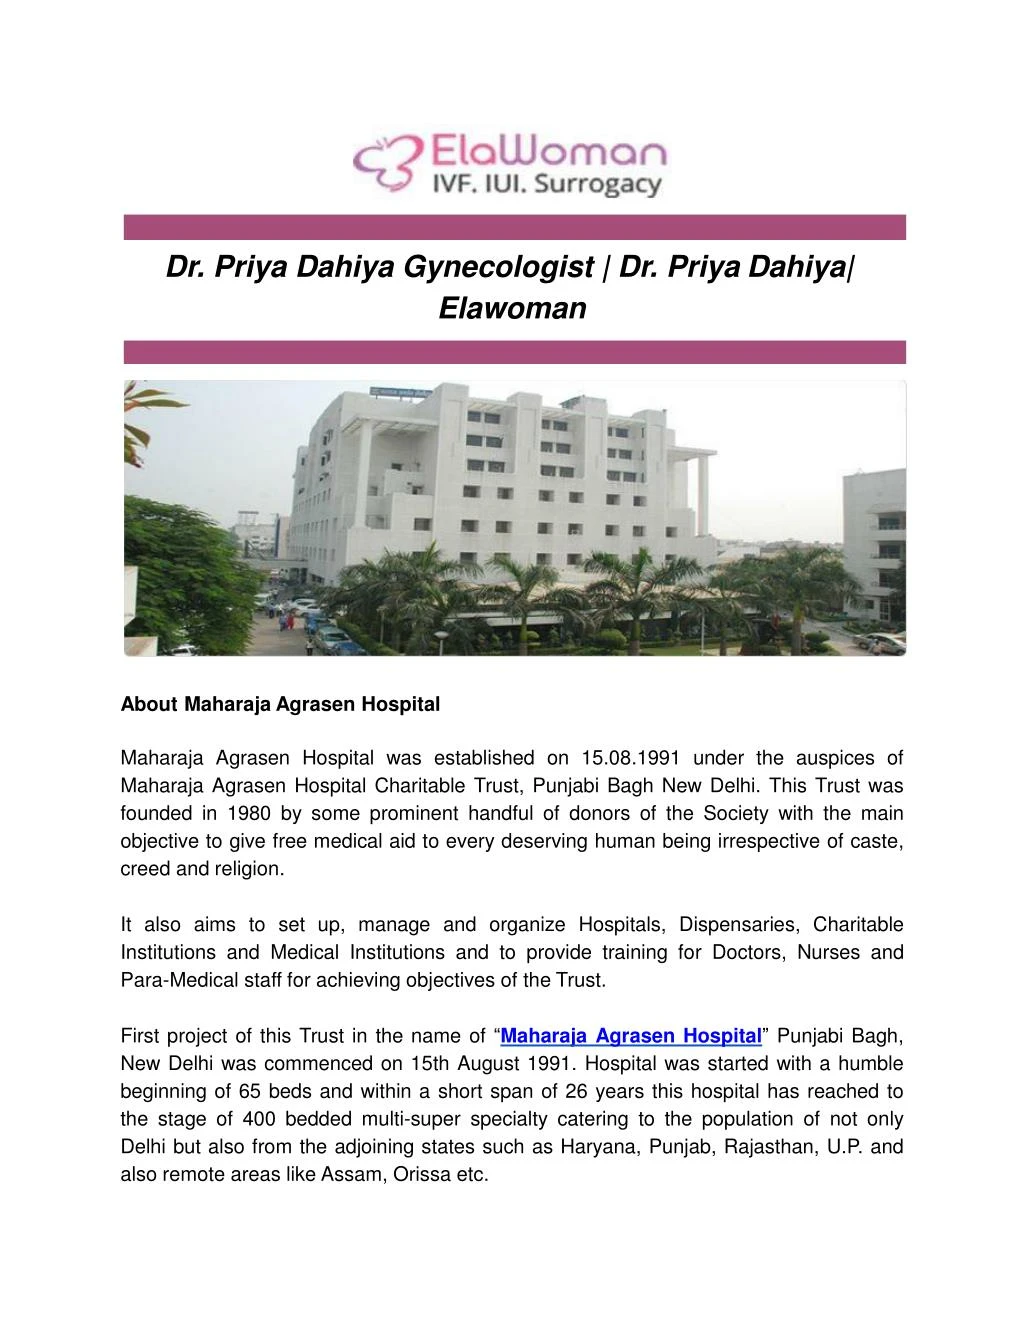 dr priya dahiya gynecologist dr priya dahiya